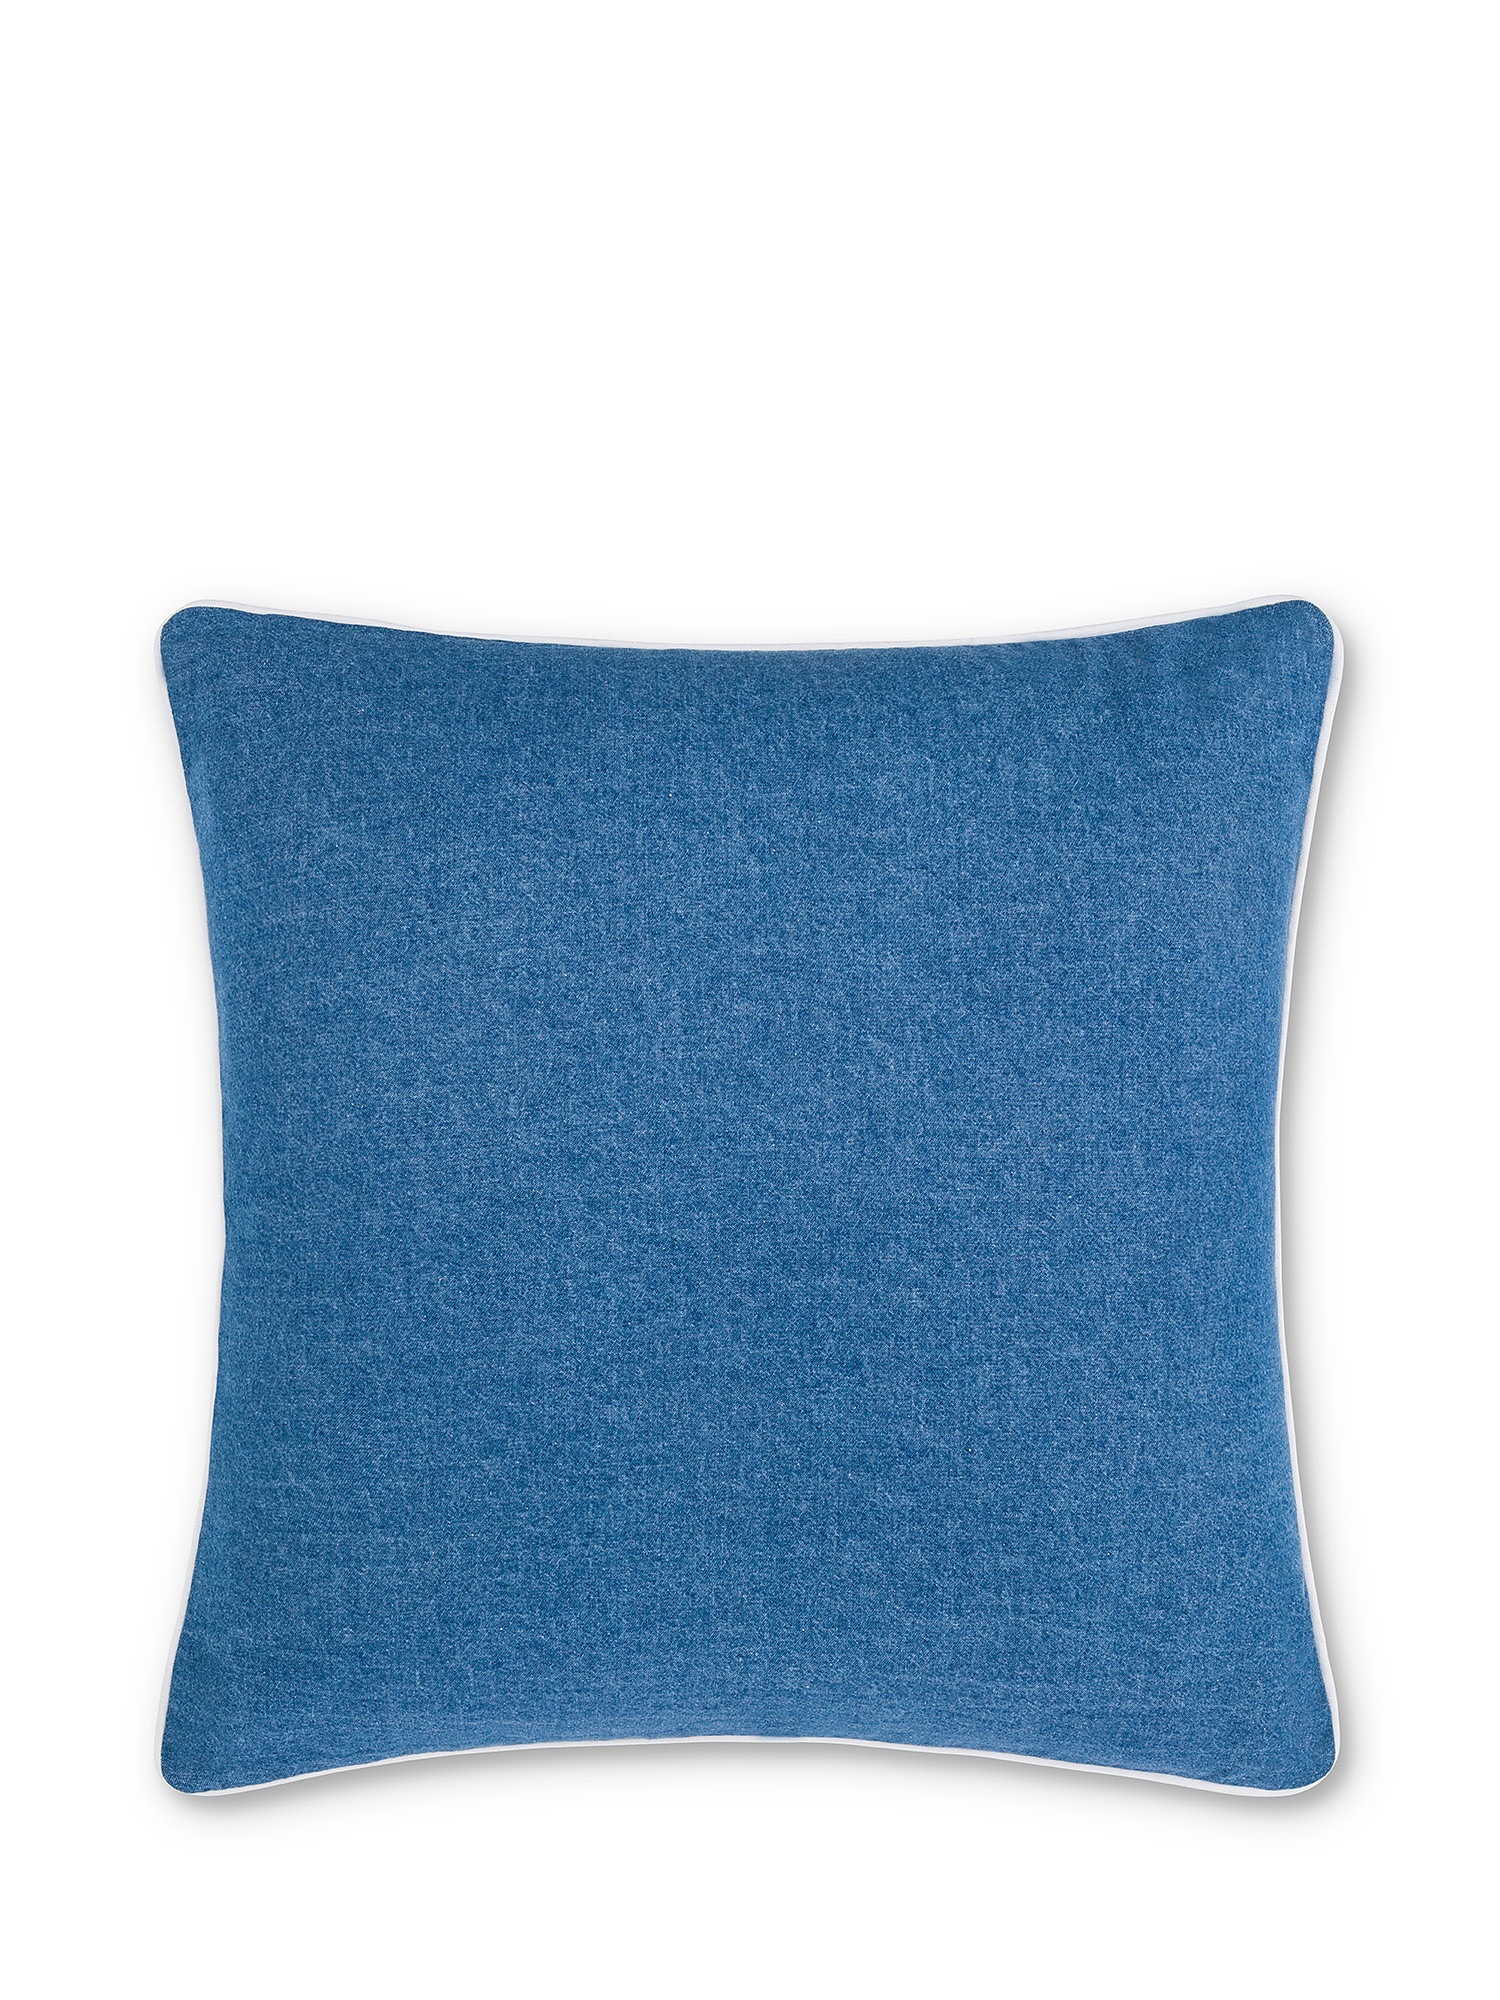 Cuscino tessuto denim 45x45cm, Azzurro, large image number 0